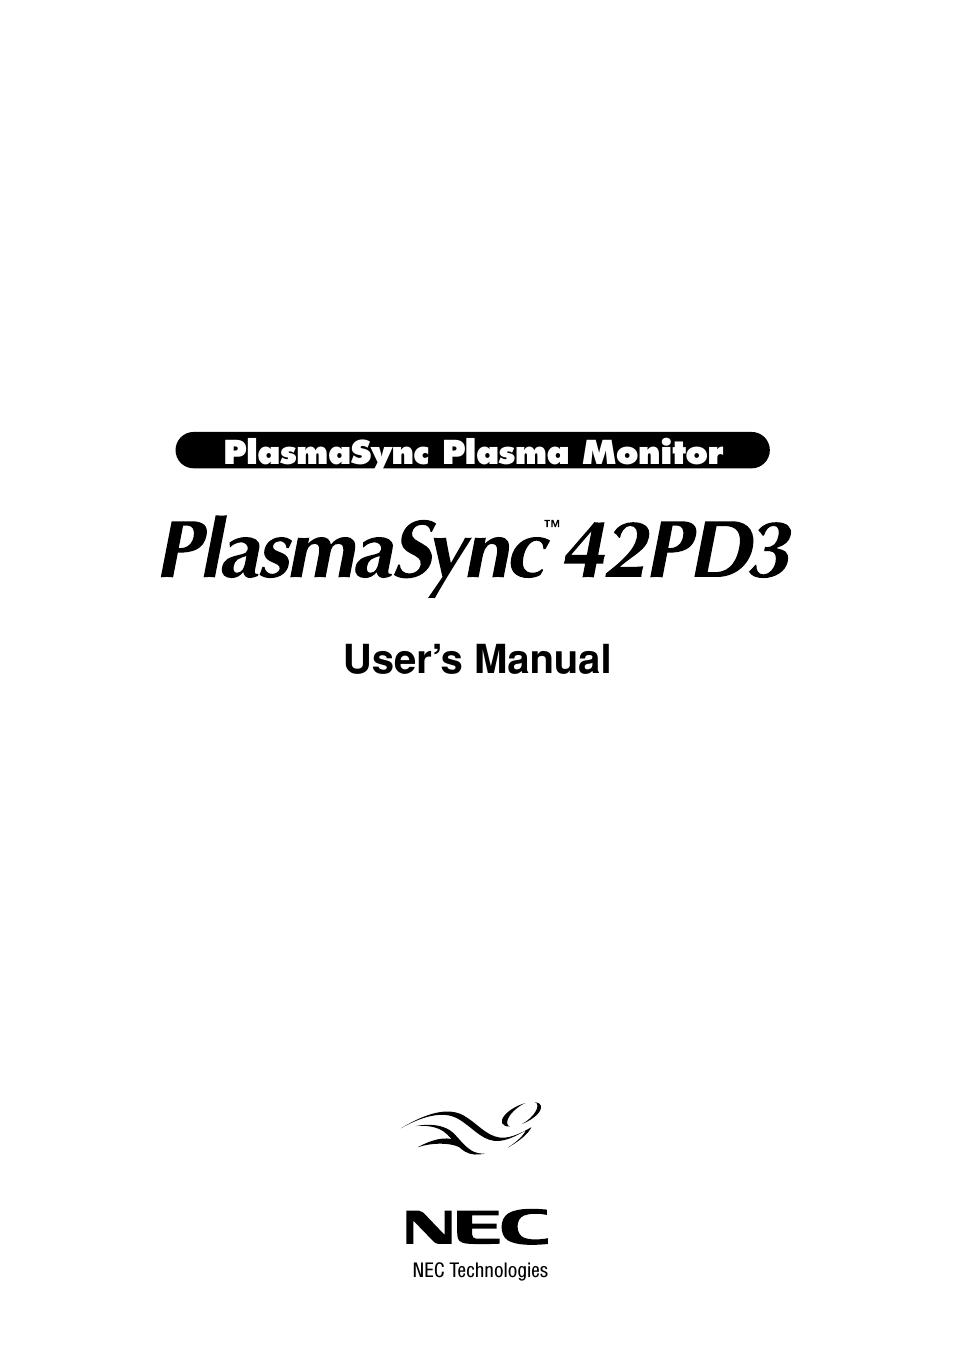 PlasmaSync 42PD3